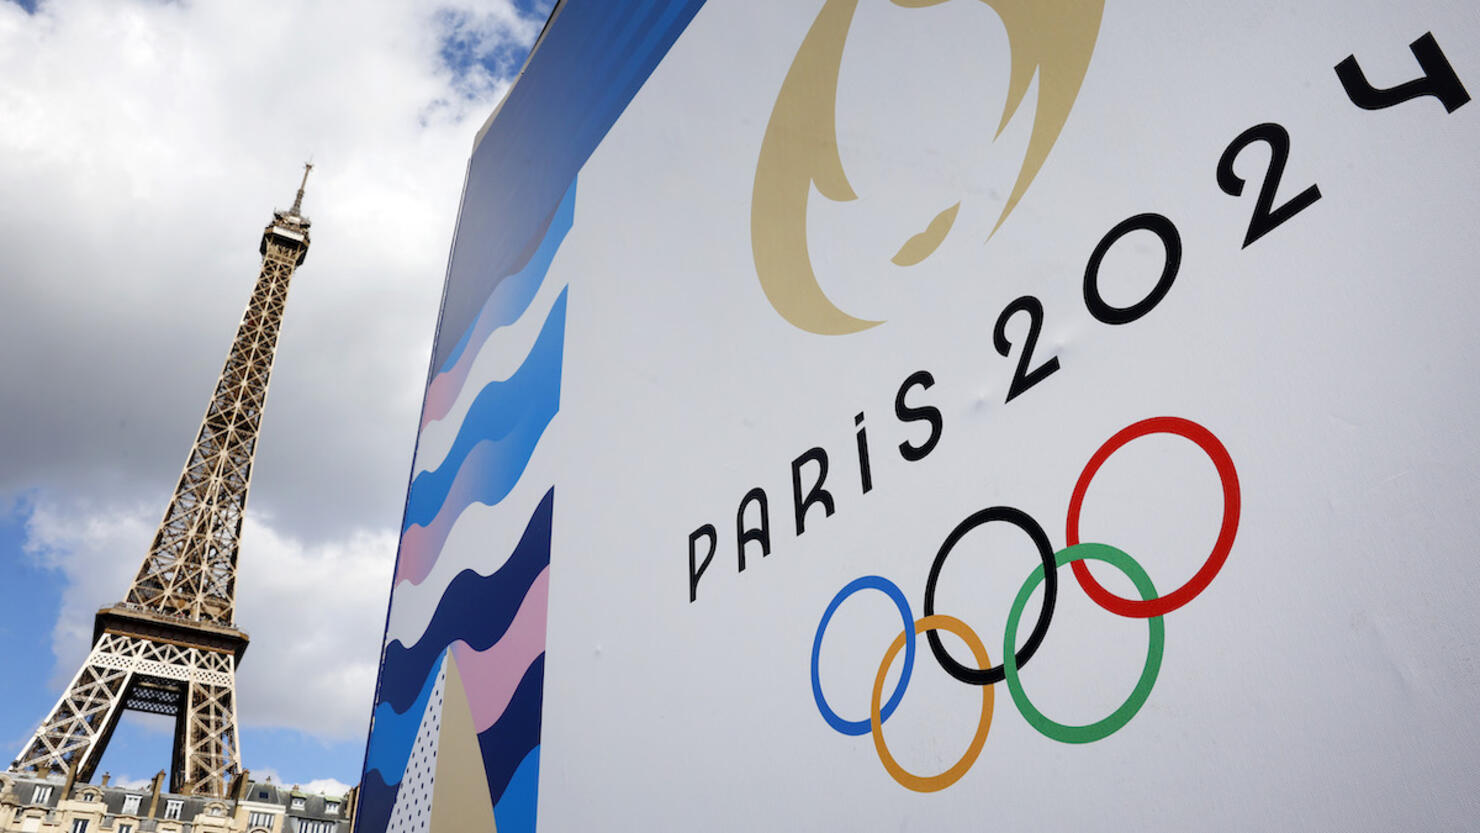 Landmarks Around Paris Ahead Of The Summer Olympics